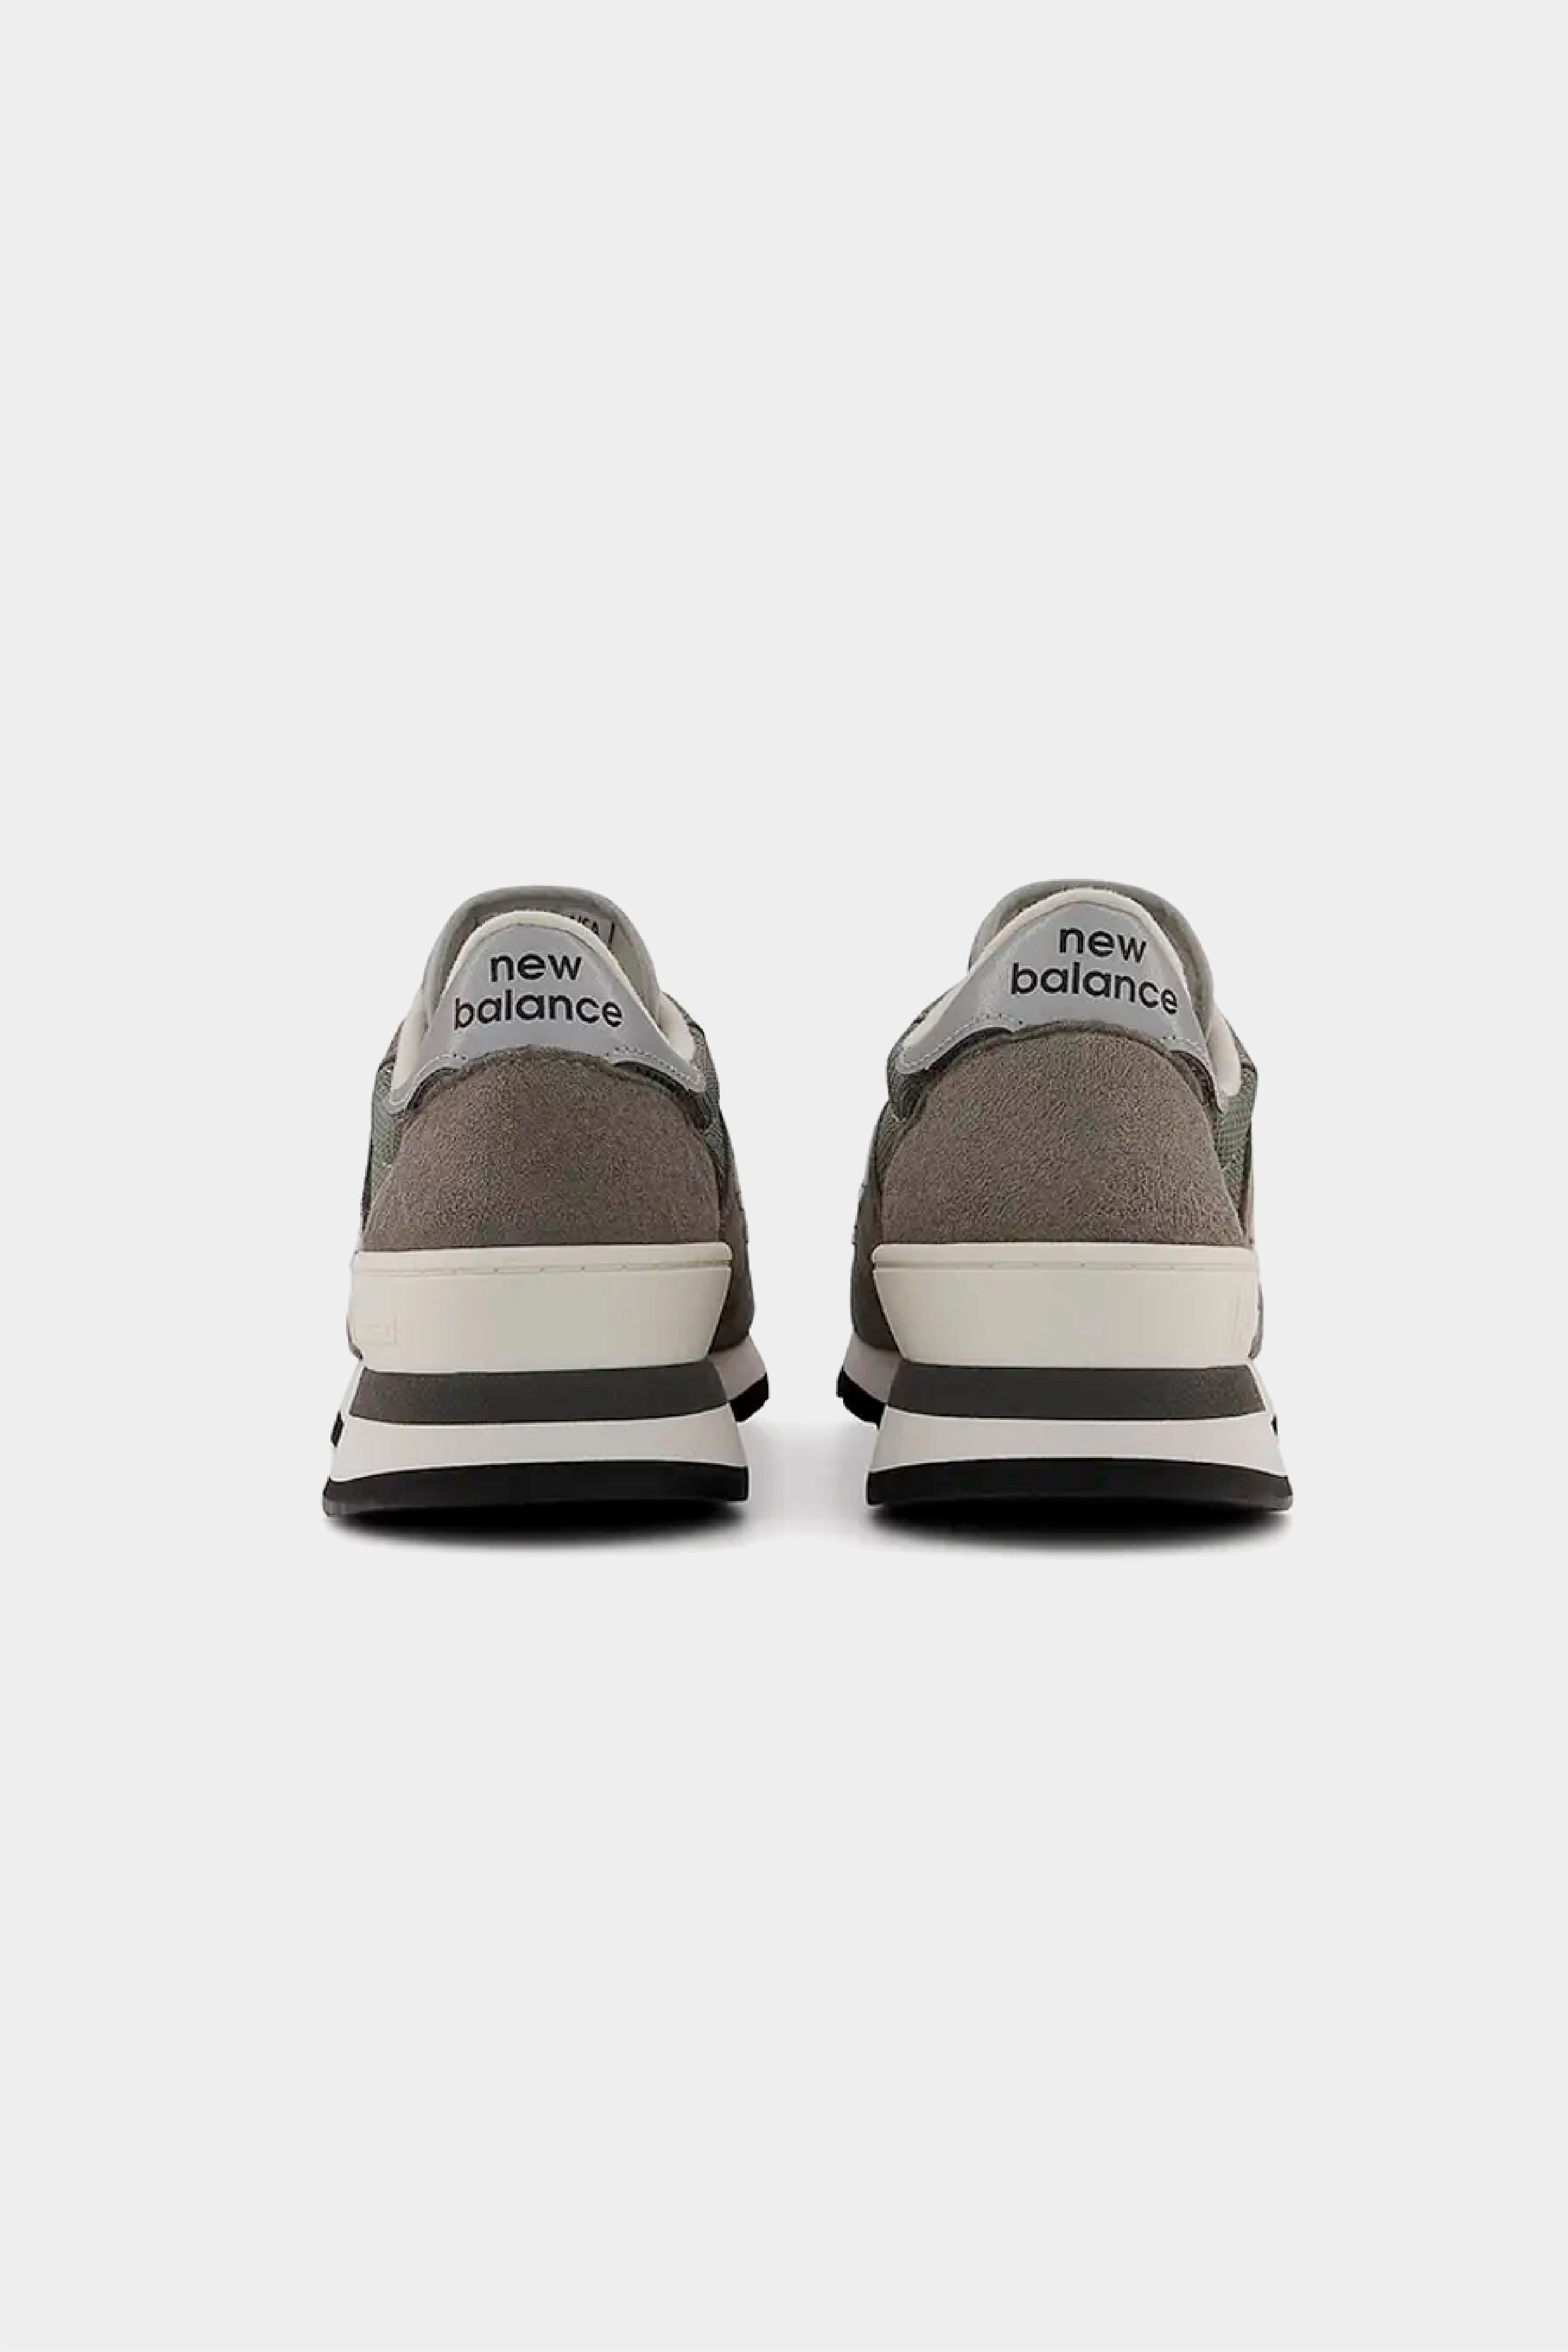 Selectshop FRAME - NEW BALANCE 990 "Made In USA Grey" Footwear Concept Store Dubai